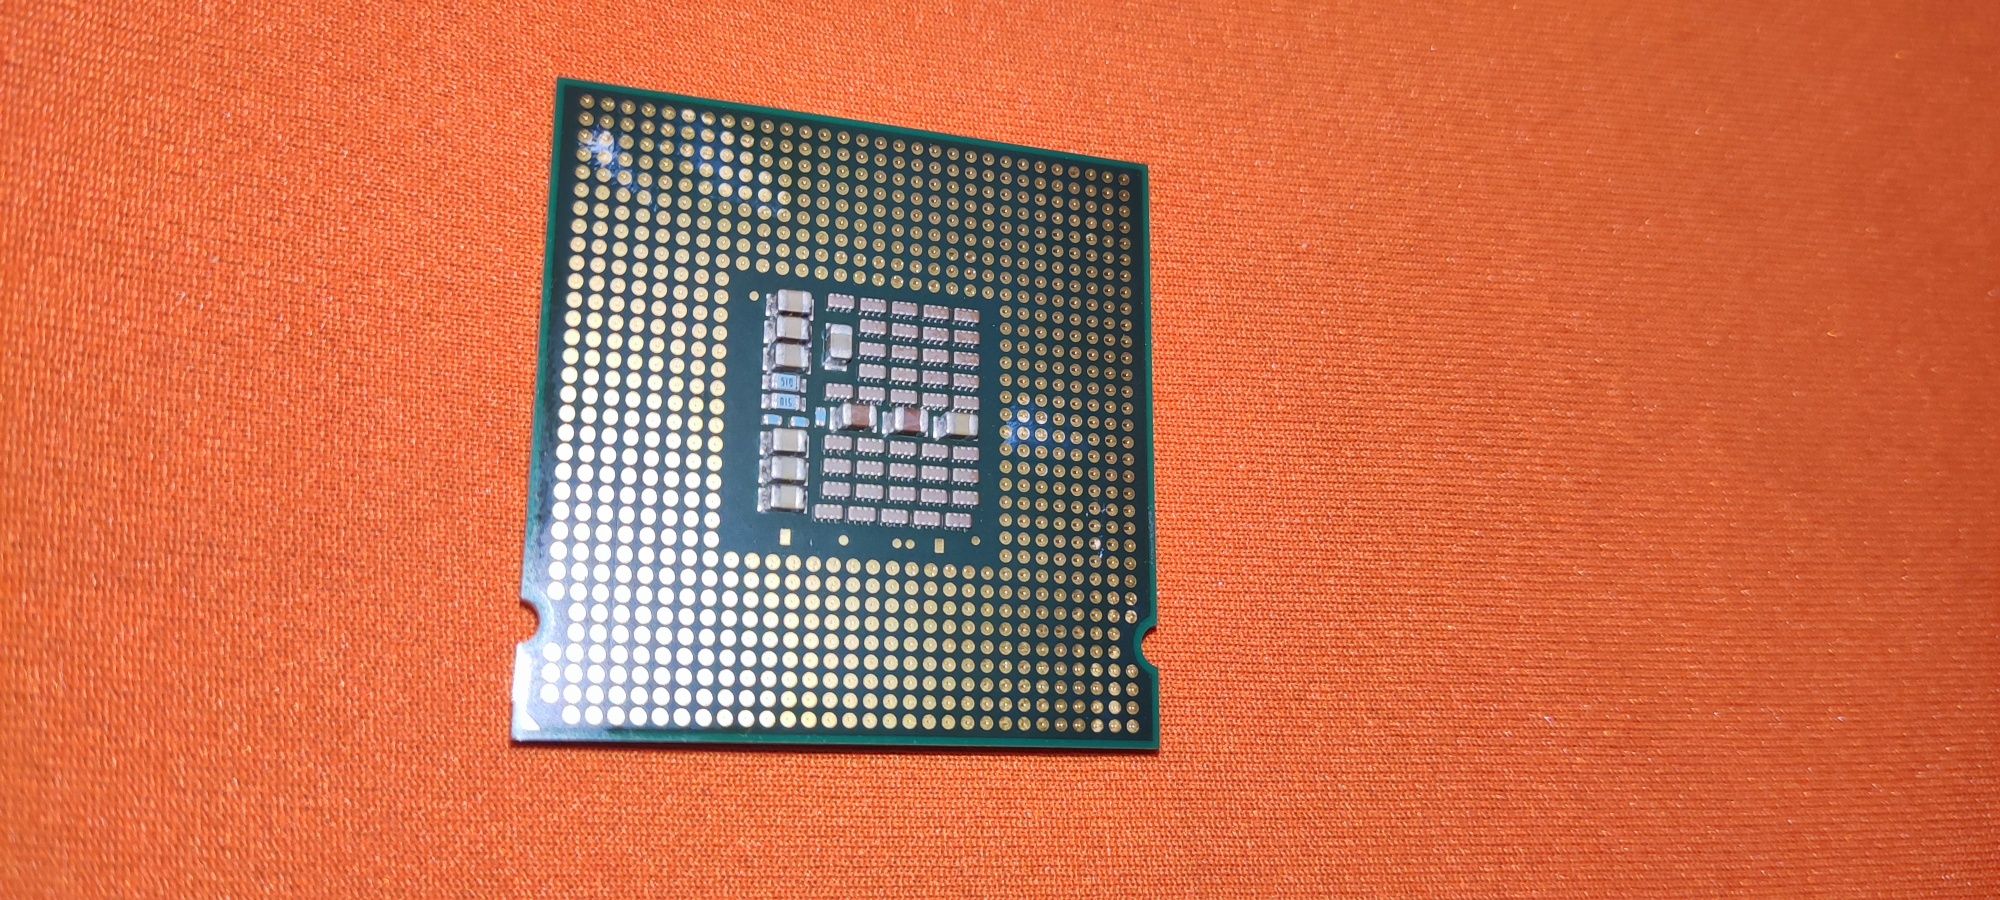 Intel core 2 quad 6600